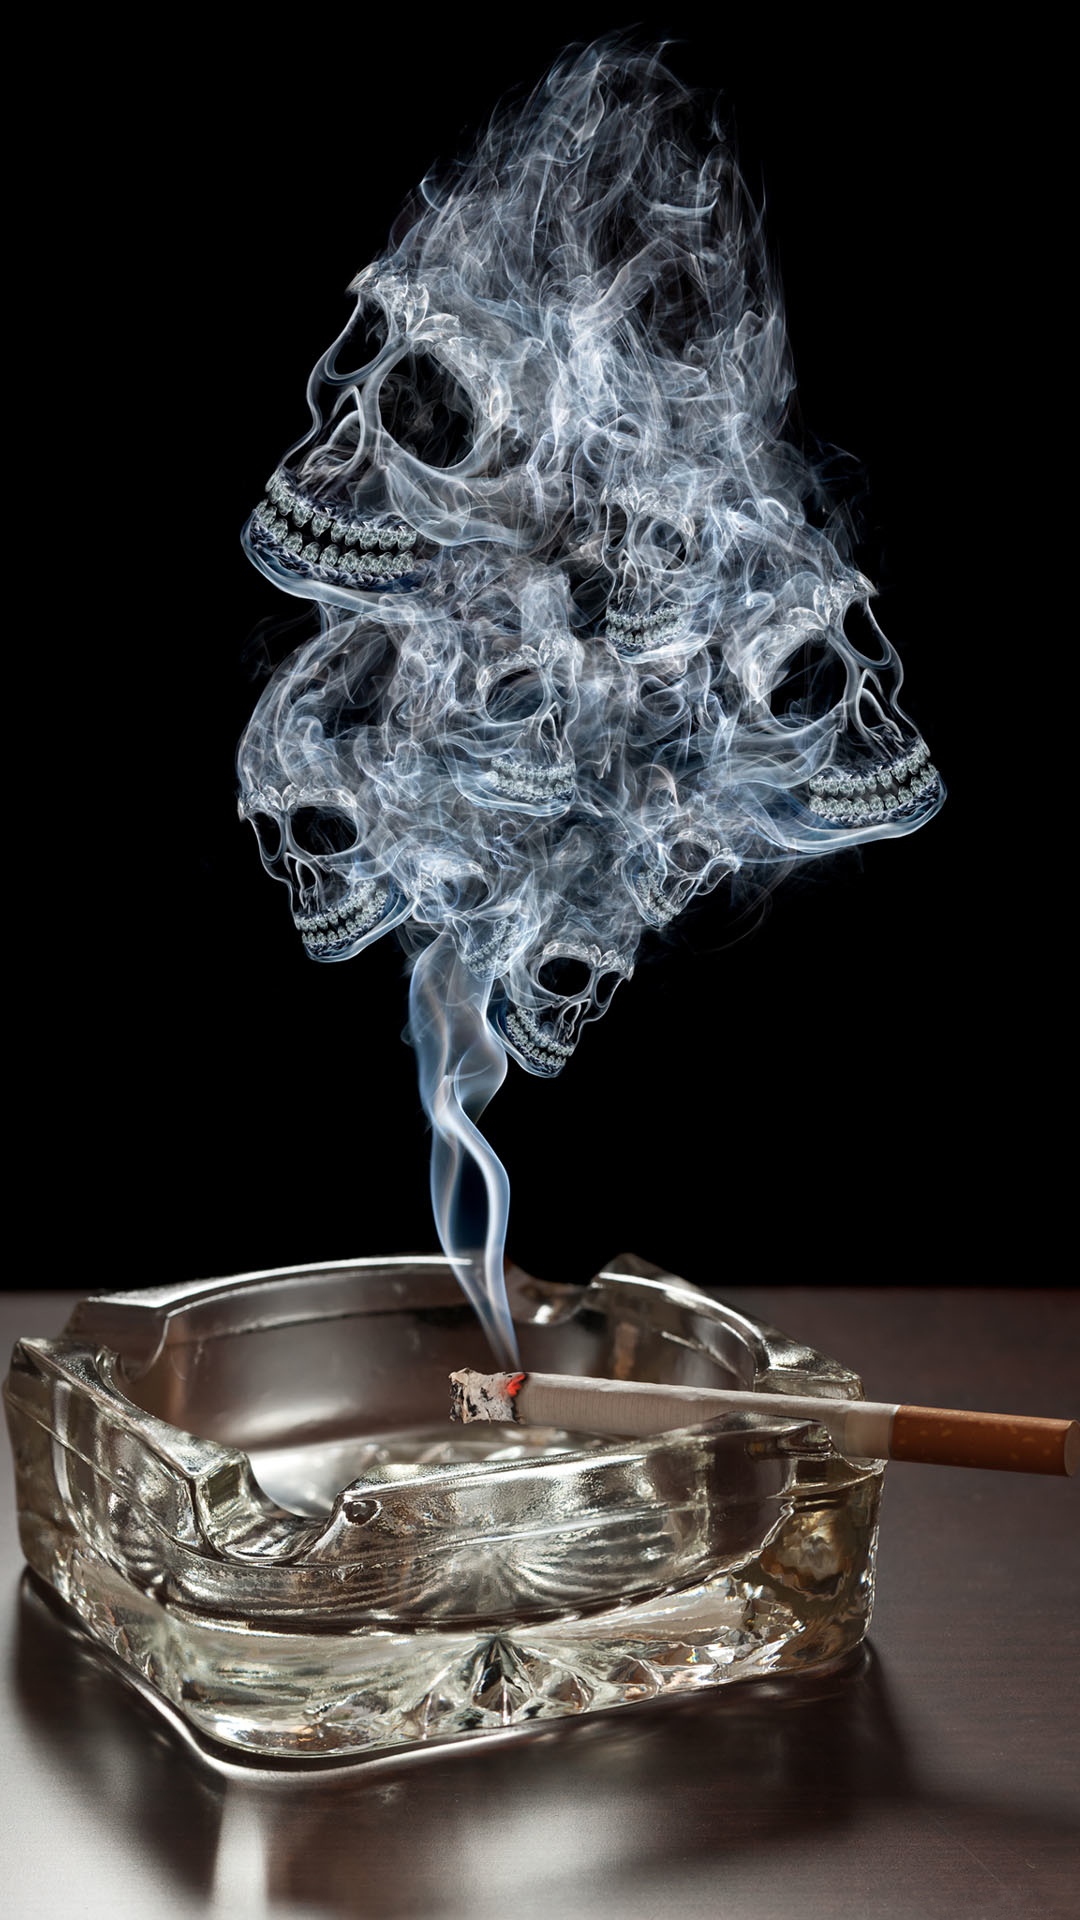 Smoke Skulls Ashtray Burning Cigarette Android Wallpaper